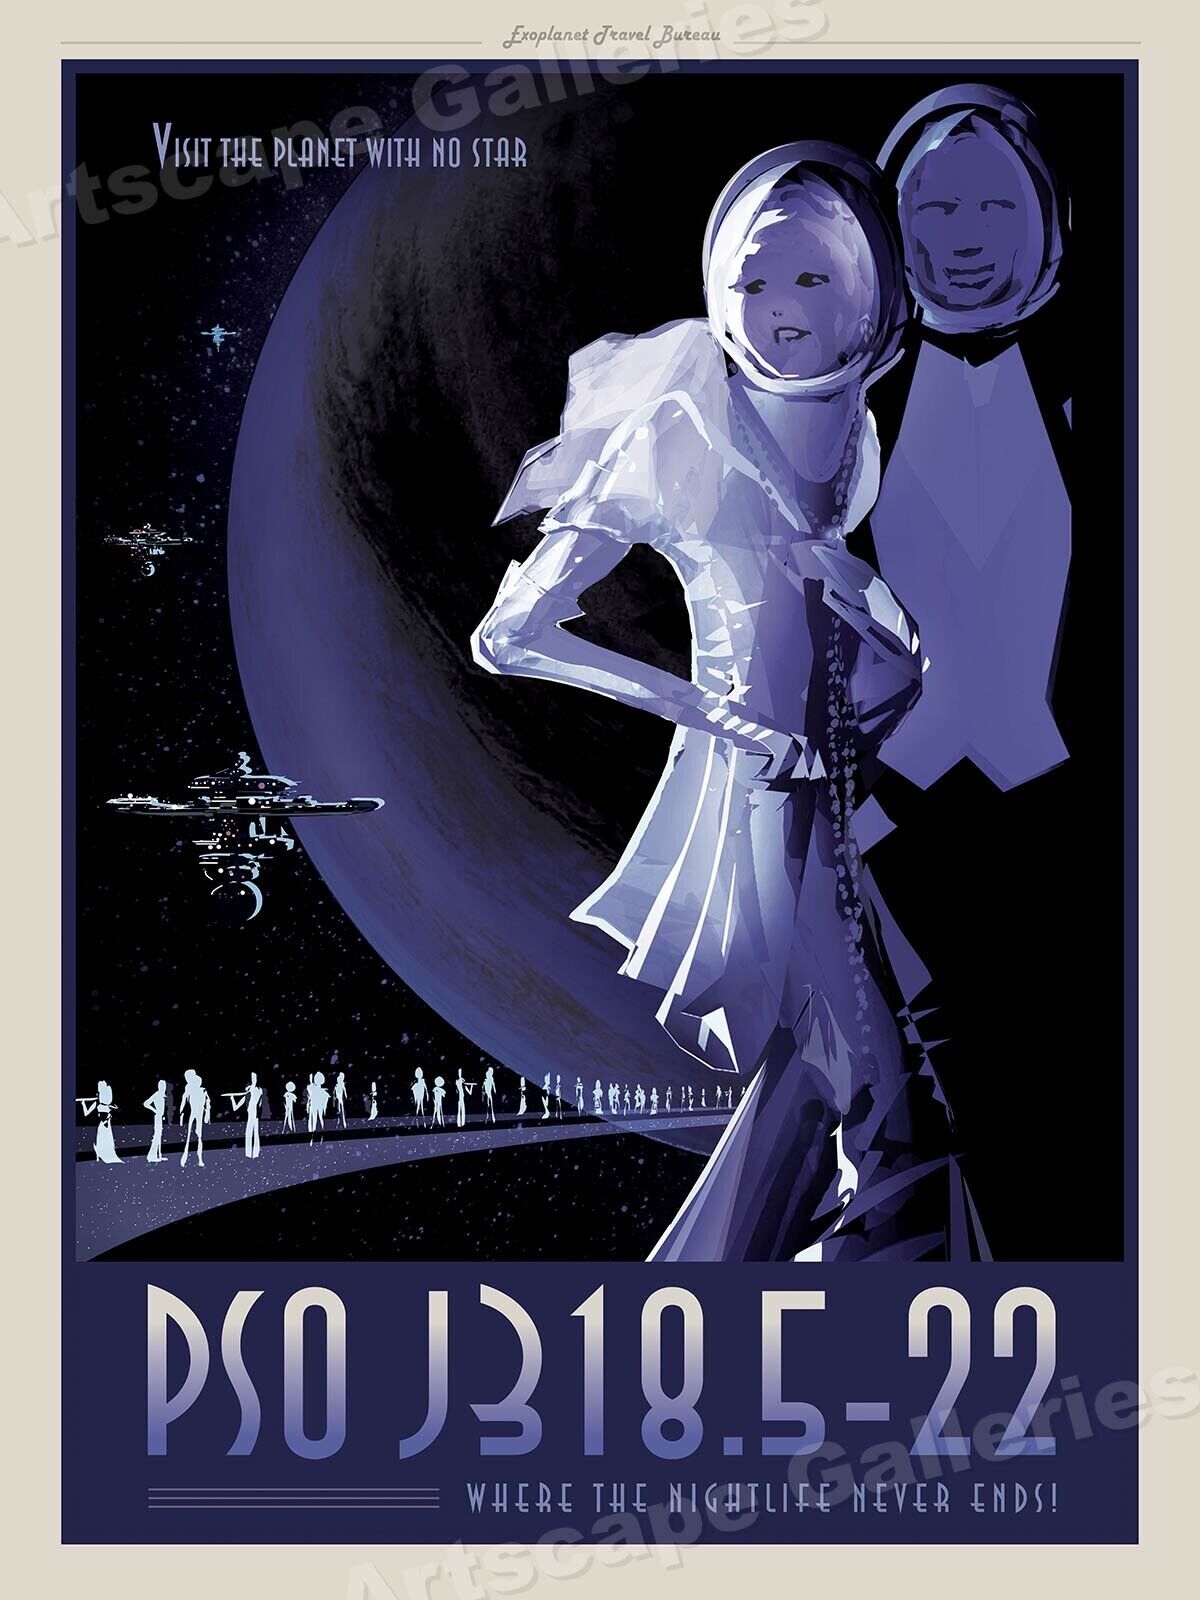 “Visit PSO J318.5-22” Outer Space Exploration Retro Travel Poster - 18x24